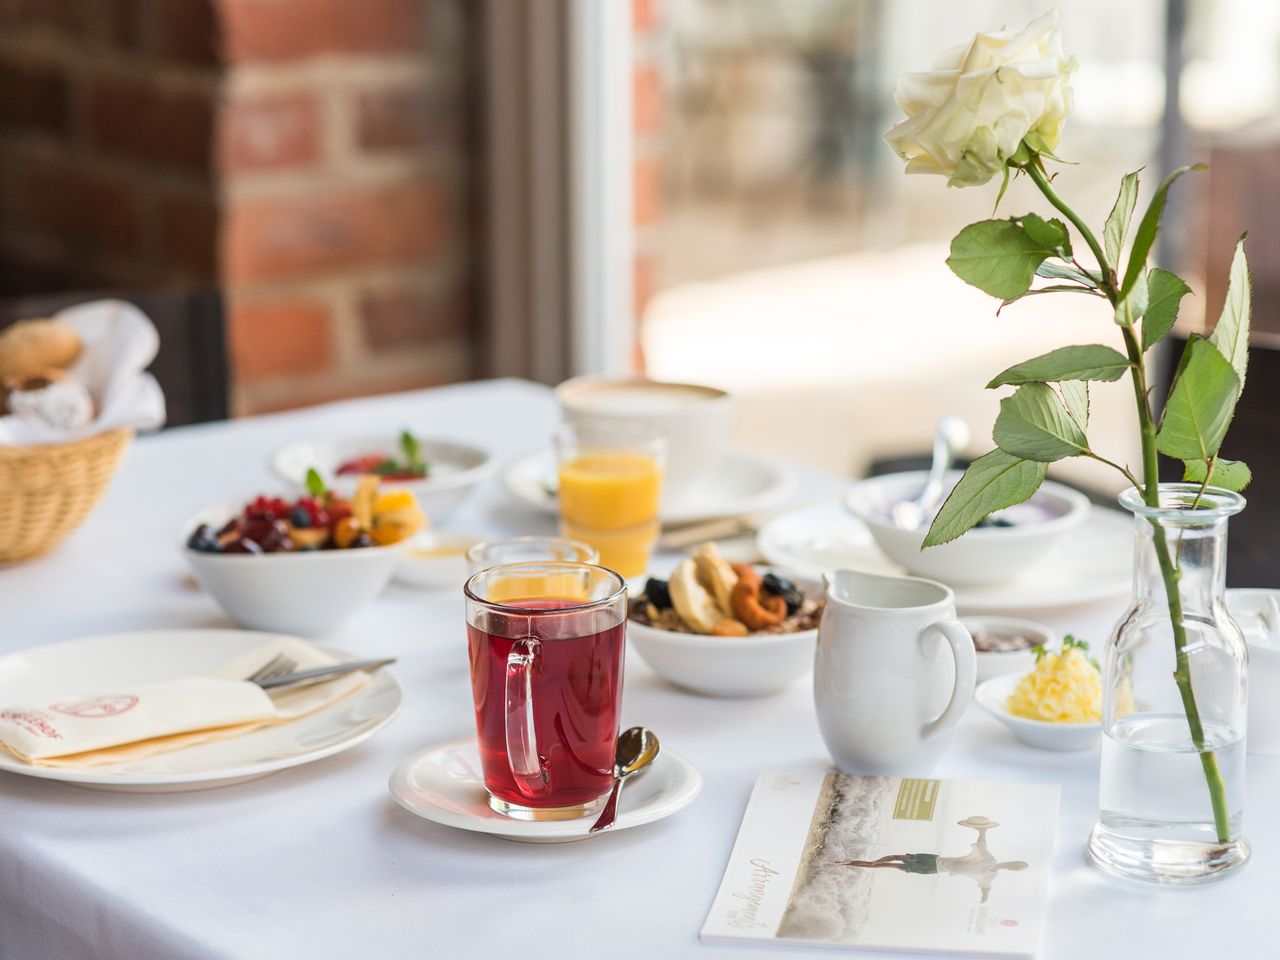 8 Tage im Romantik Hotel Scheelehof mit Frühstück